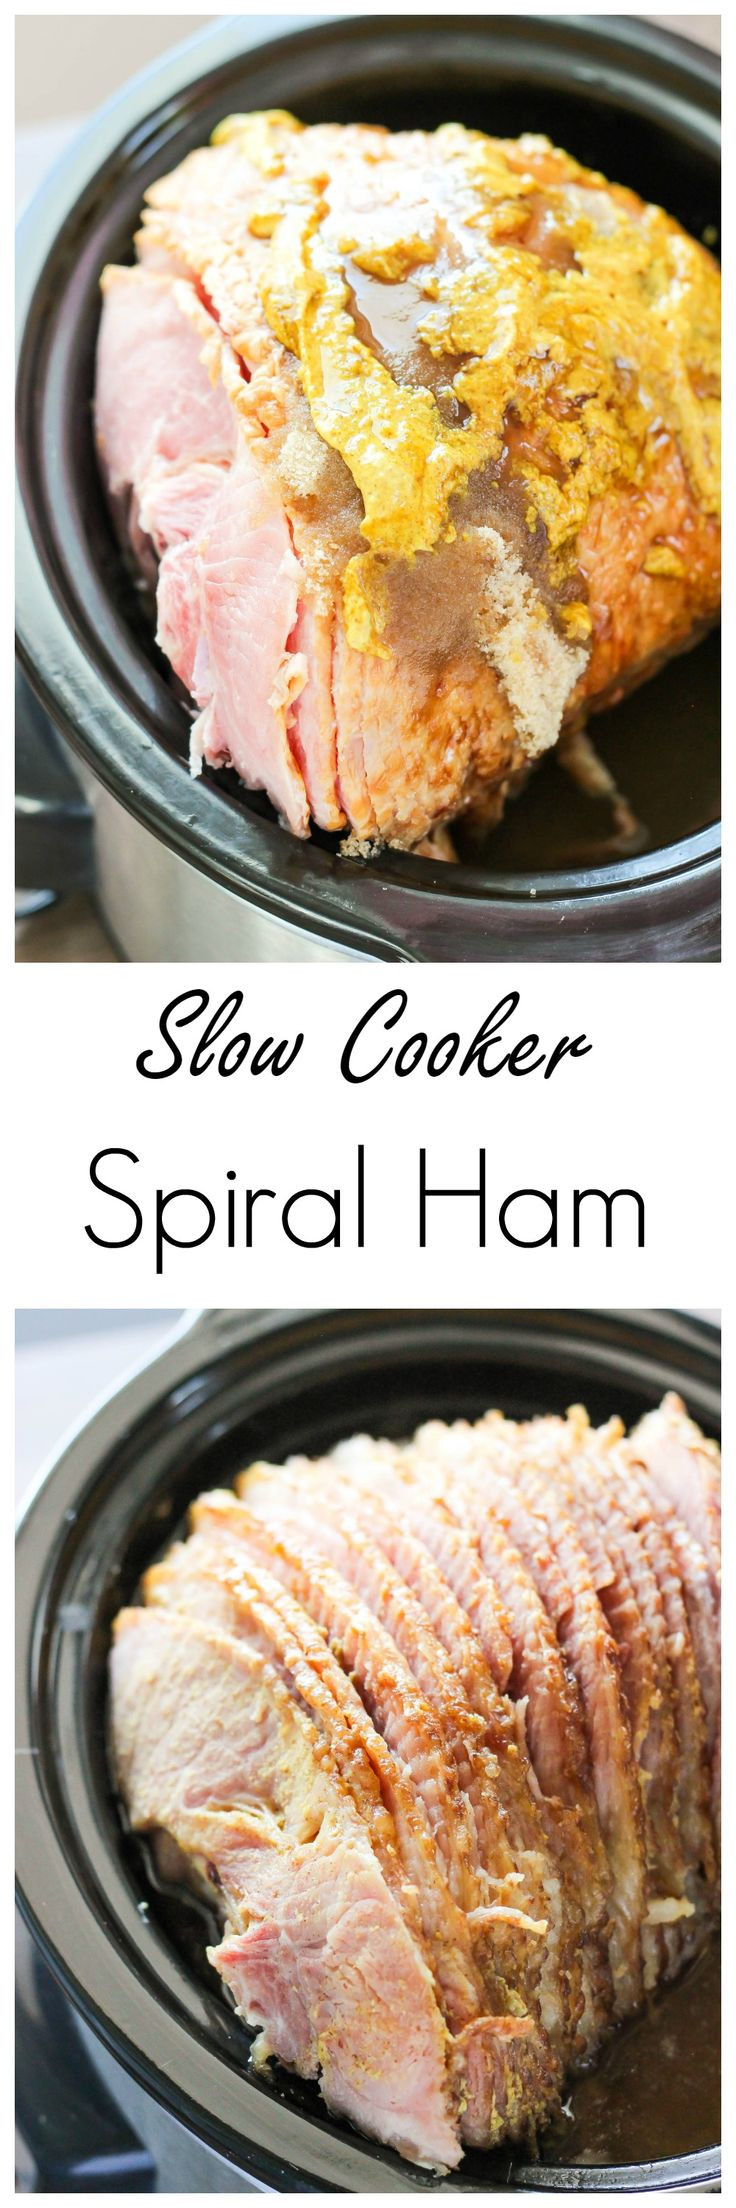 Slow Cooked Easter Ham
 Slow Cooker Spiral Ham